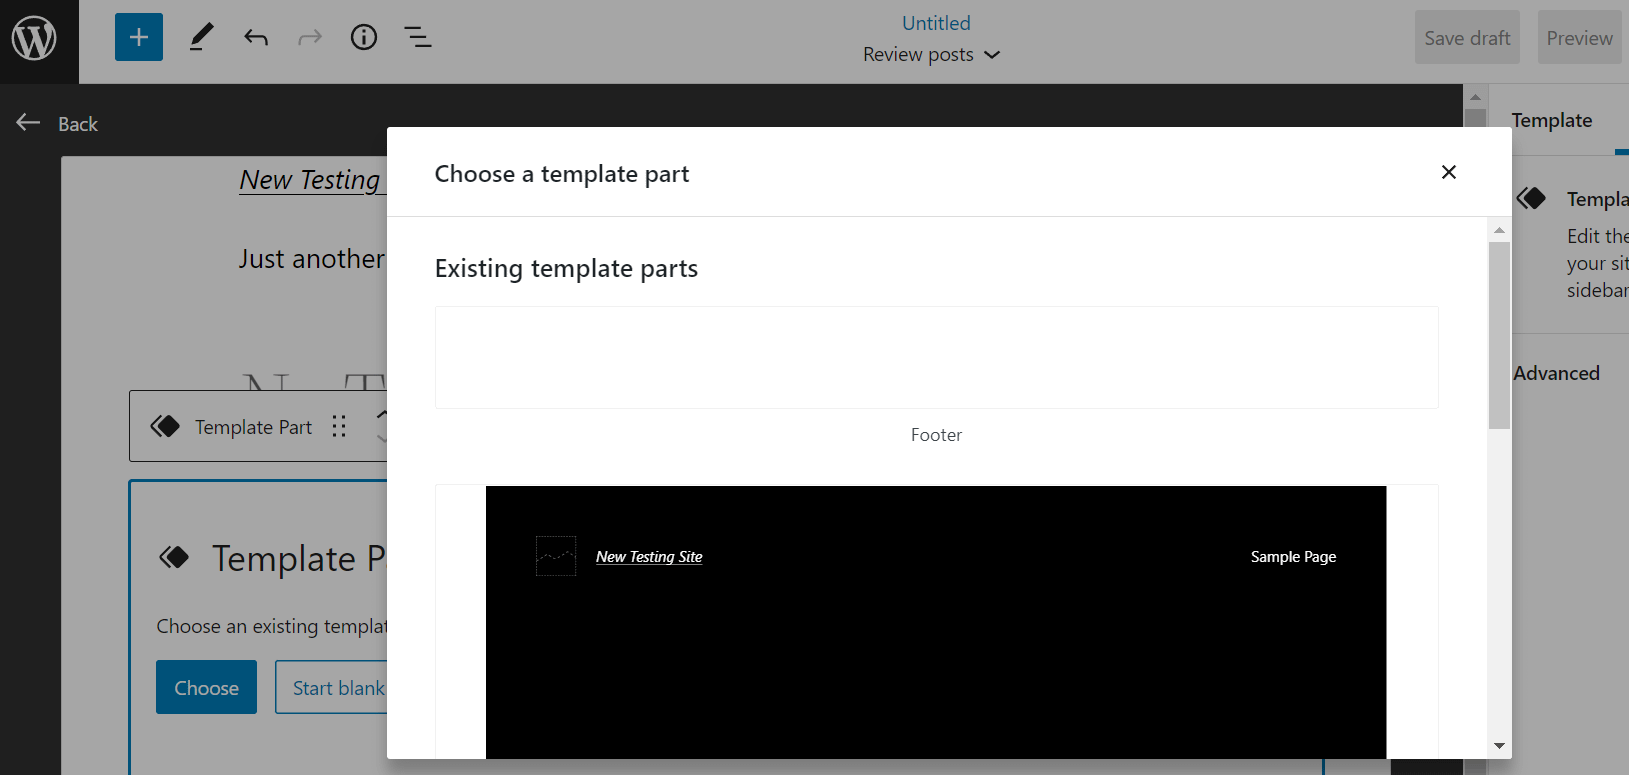 Template parts in a custom WordPress template. 